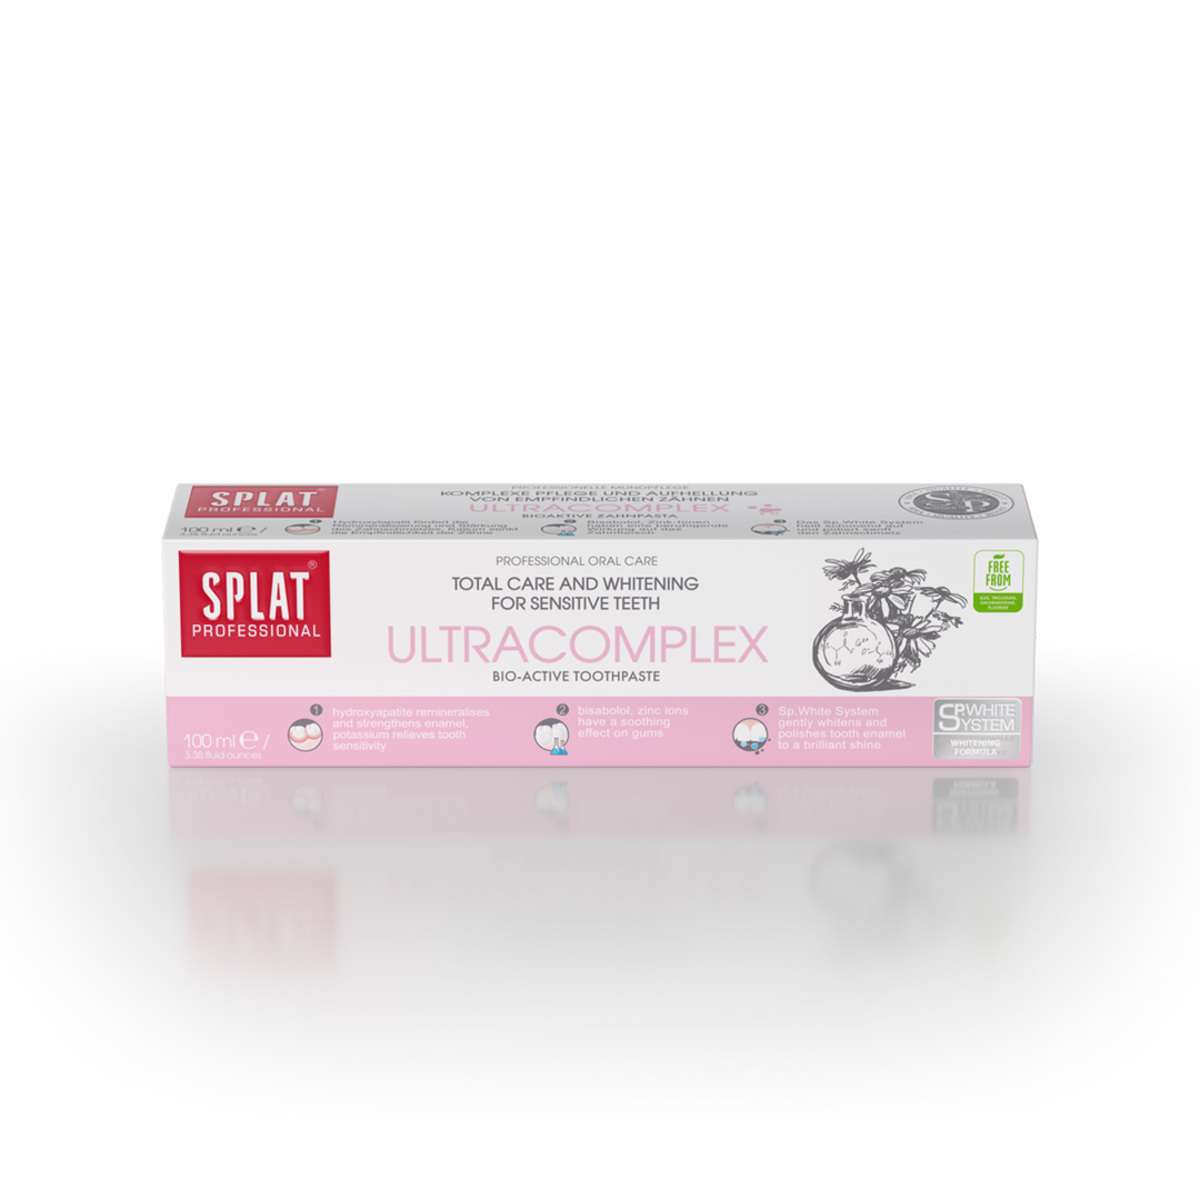 Splat Professional Toothpaste Ultra Complex 100ml